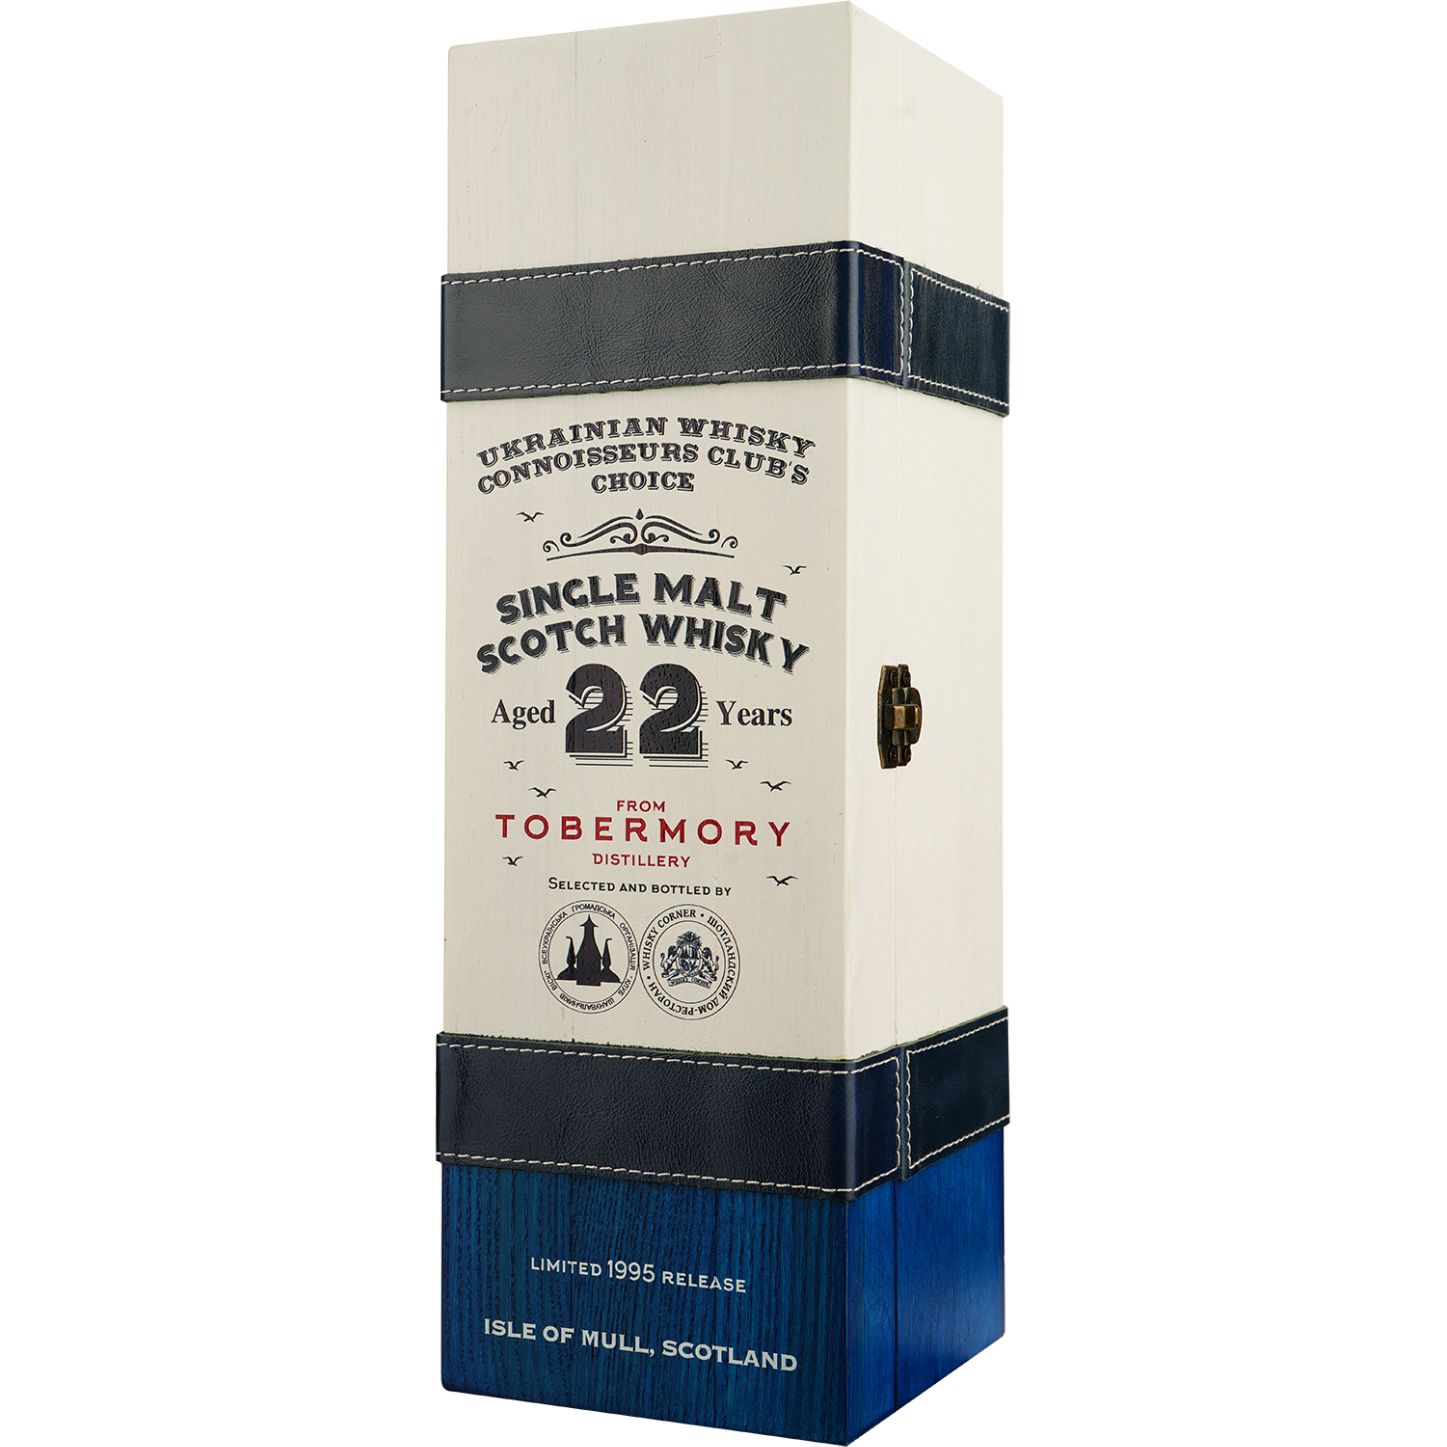 Віскі Tobermory 22 Years Old 1st Fill Allier Single Malt Scotch Whisky, у подарунковій упаковці, 56,6%, 0,7 л - фото 3